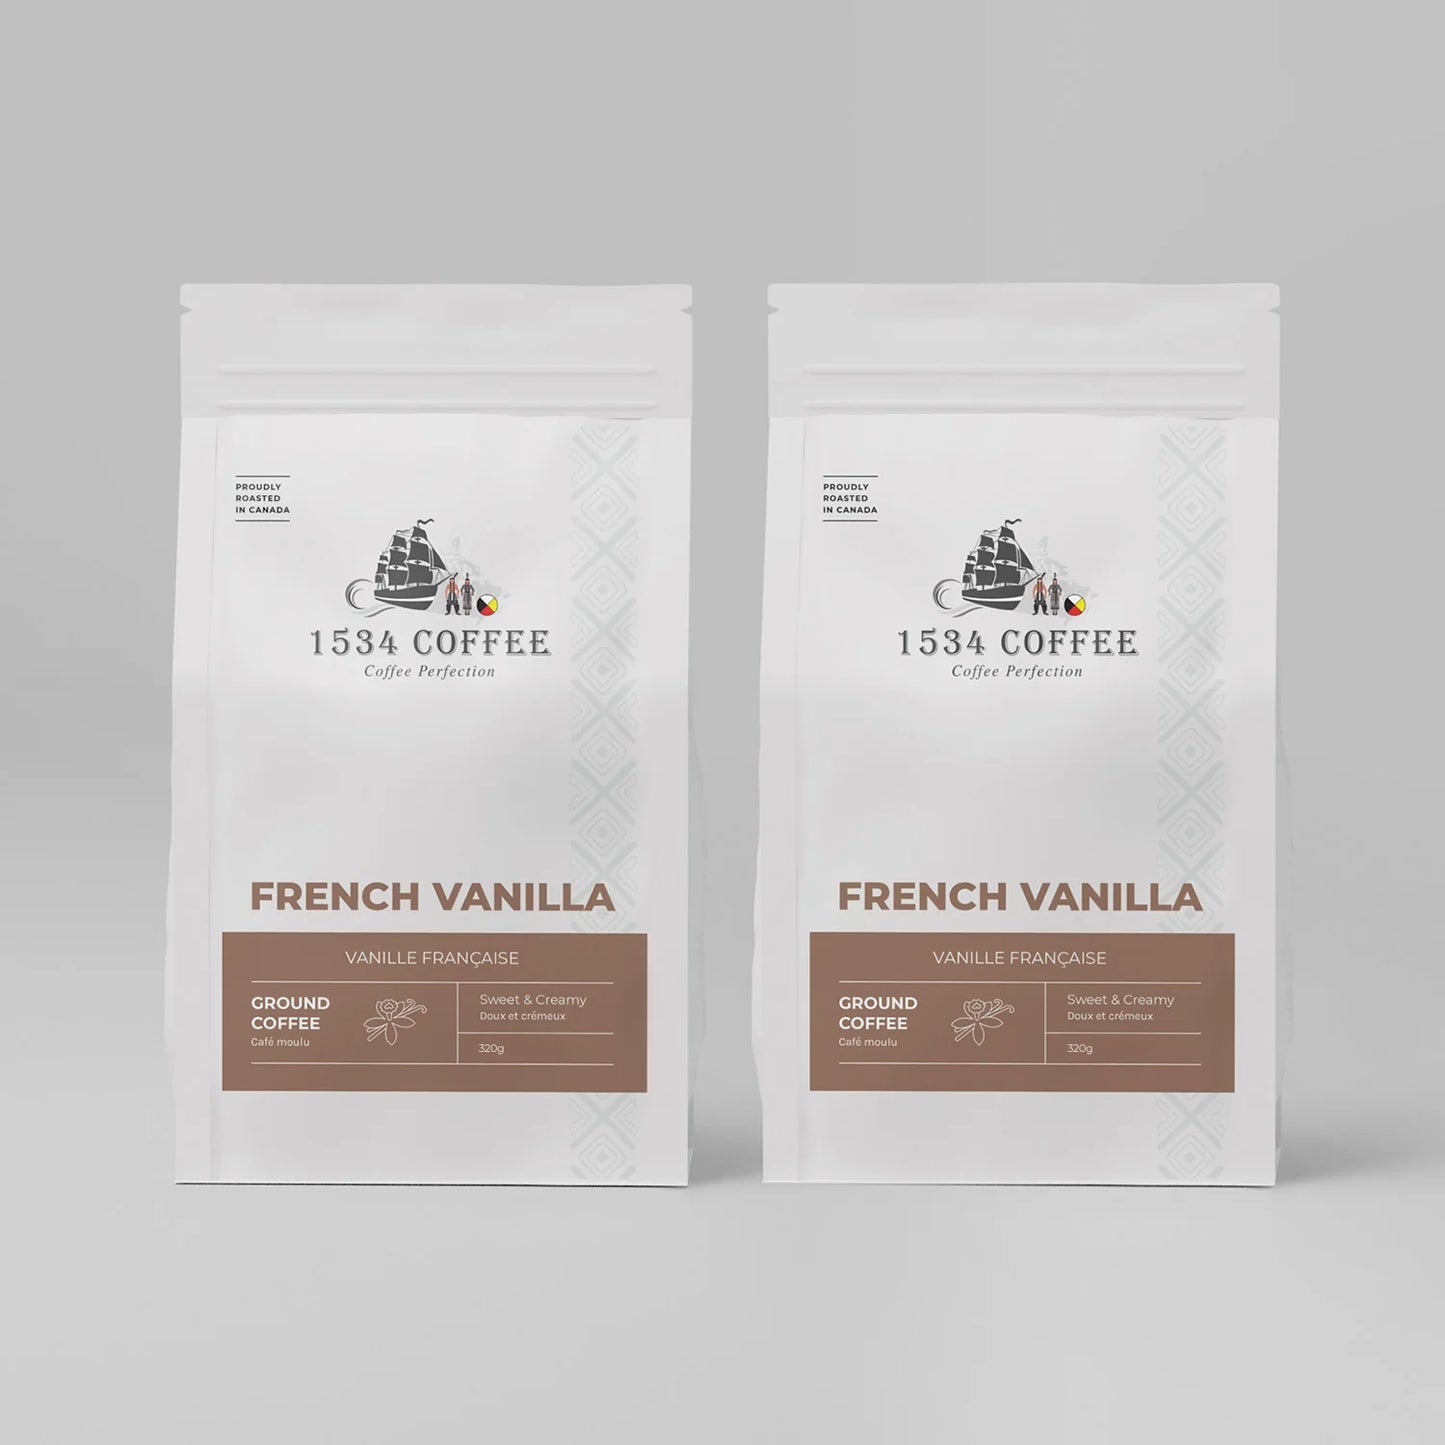 French Vanilla - Ground Coffee